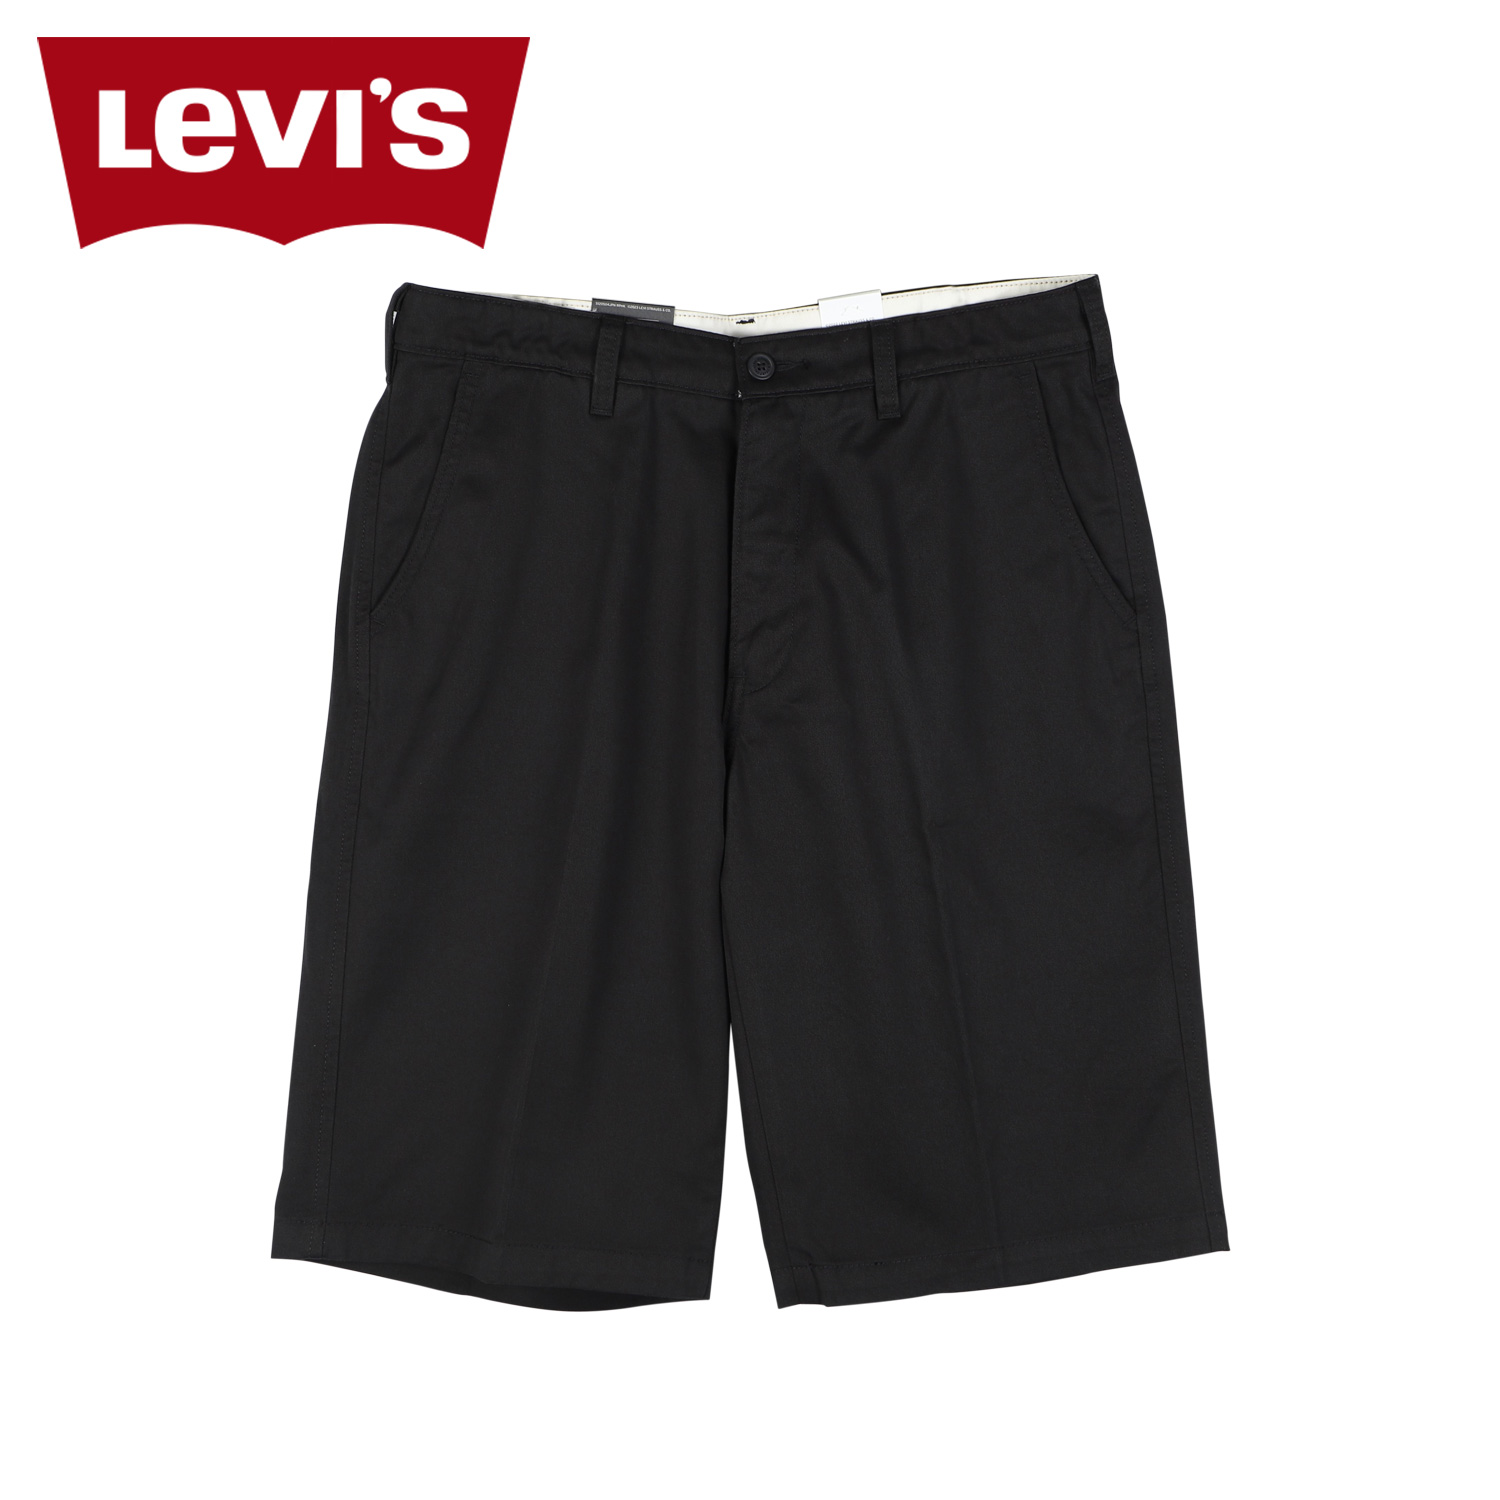 LEVIS リーバイス ショートパンツ ハーフパンツ プレスト バルミューダショーツ メンズ ルーズフィット STA PREST BERMUDA  SHORTS ブラック 黒 A4688-0001